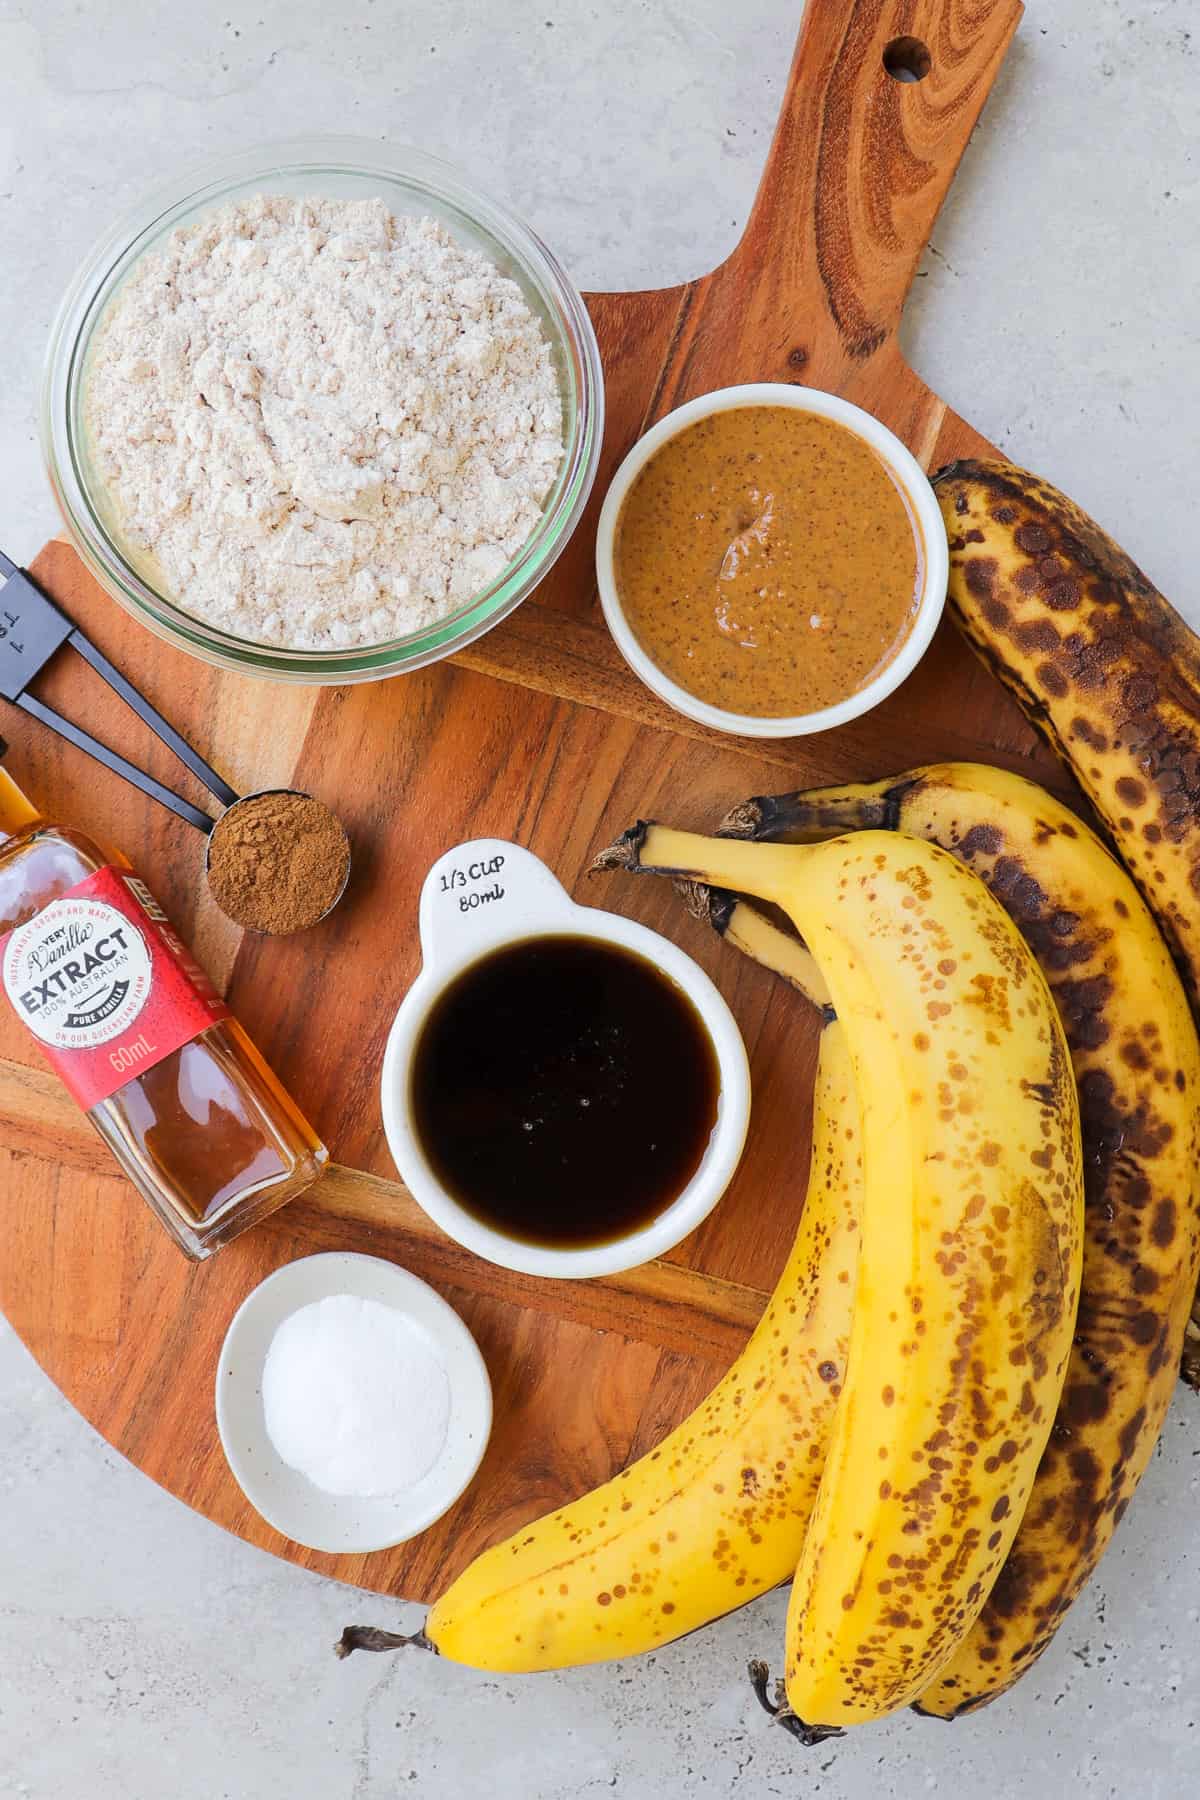 Ingredients on wooden board to make vegan banana bread.